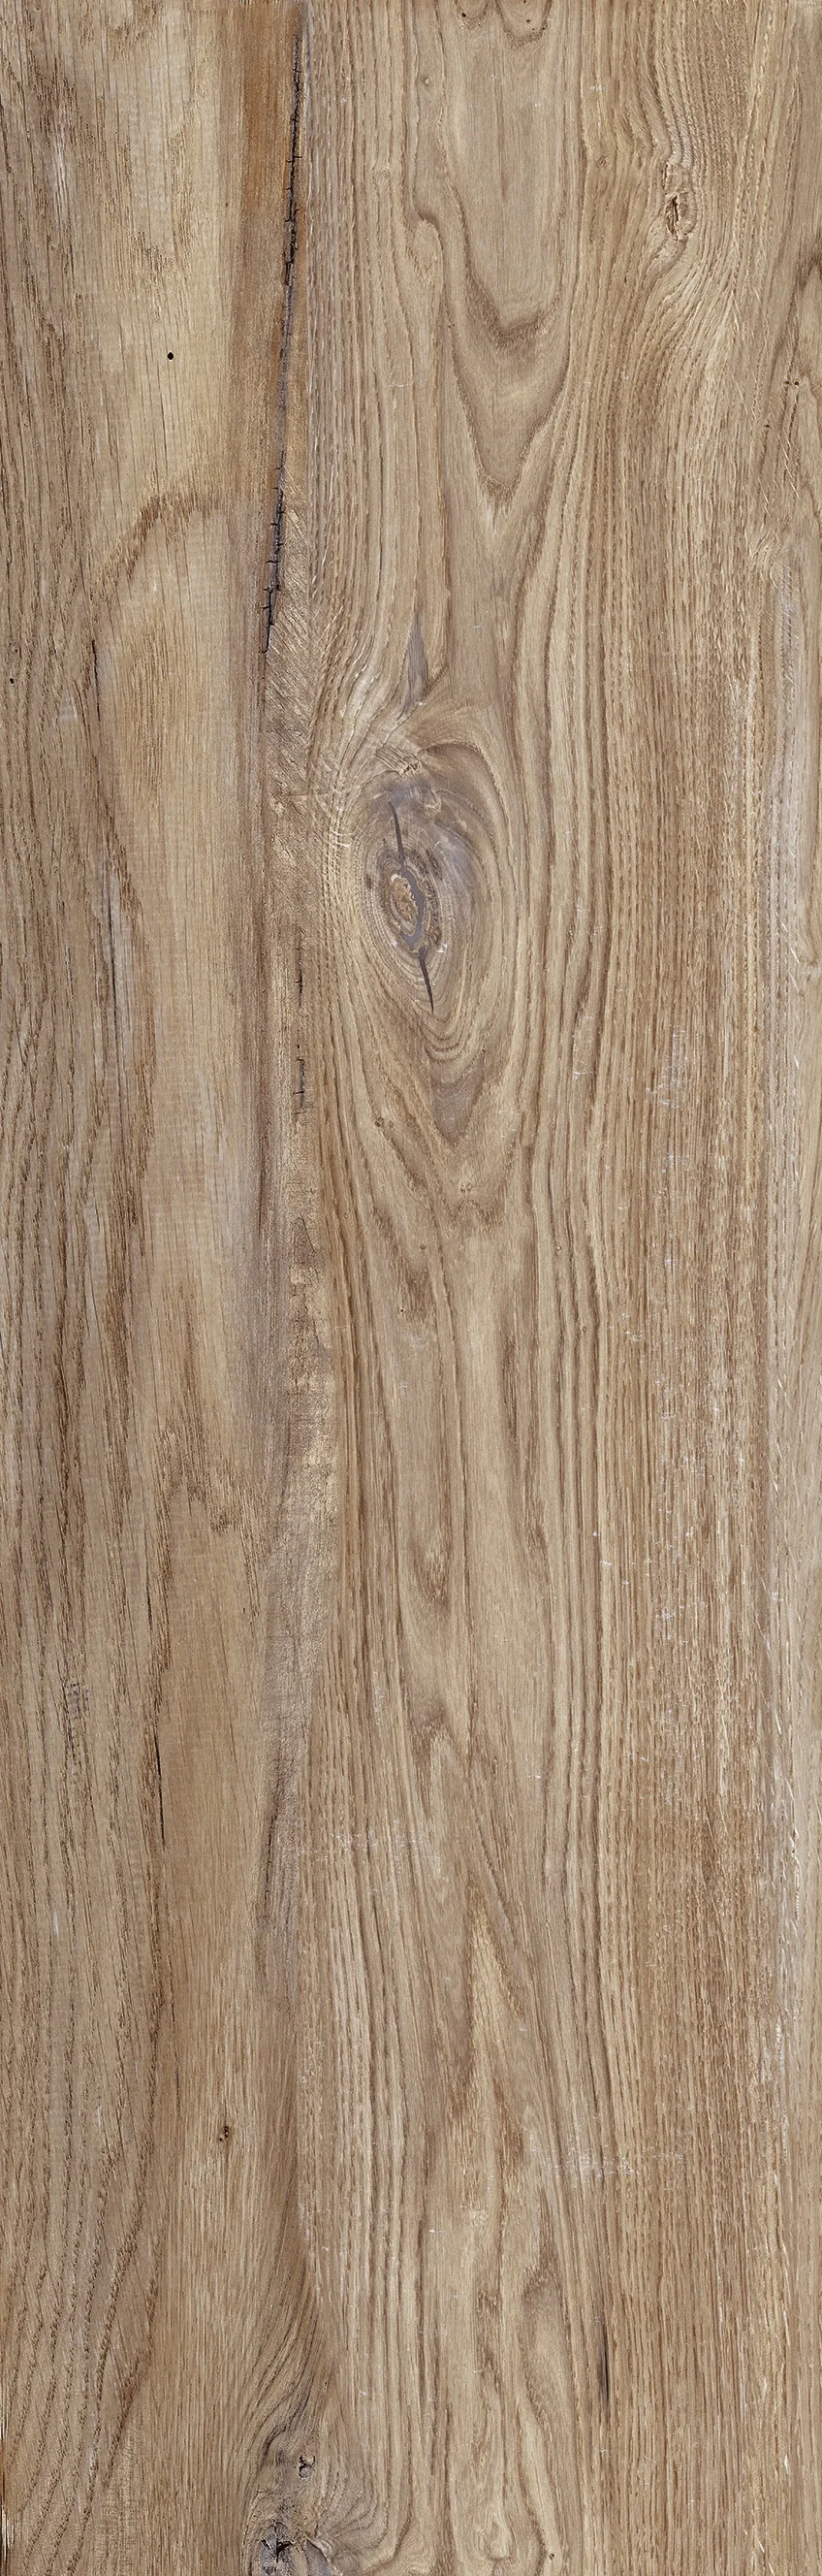 Castelvetro Woodland Oak 20x80 cm